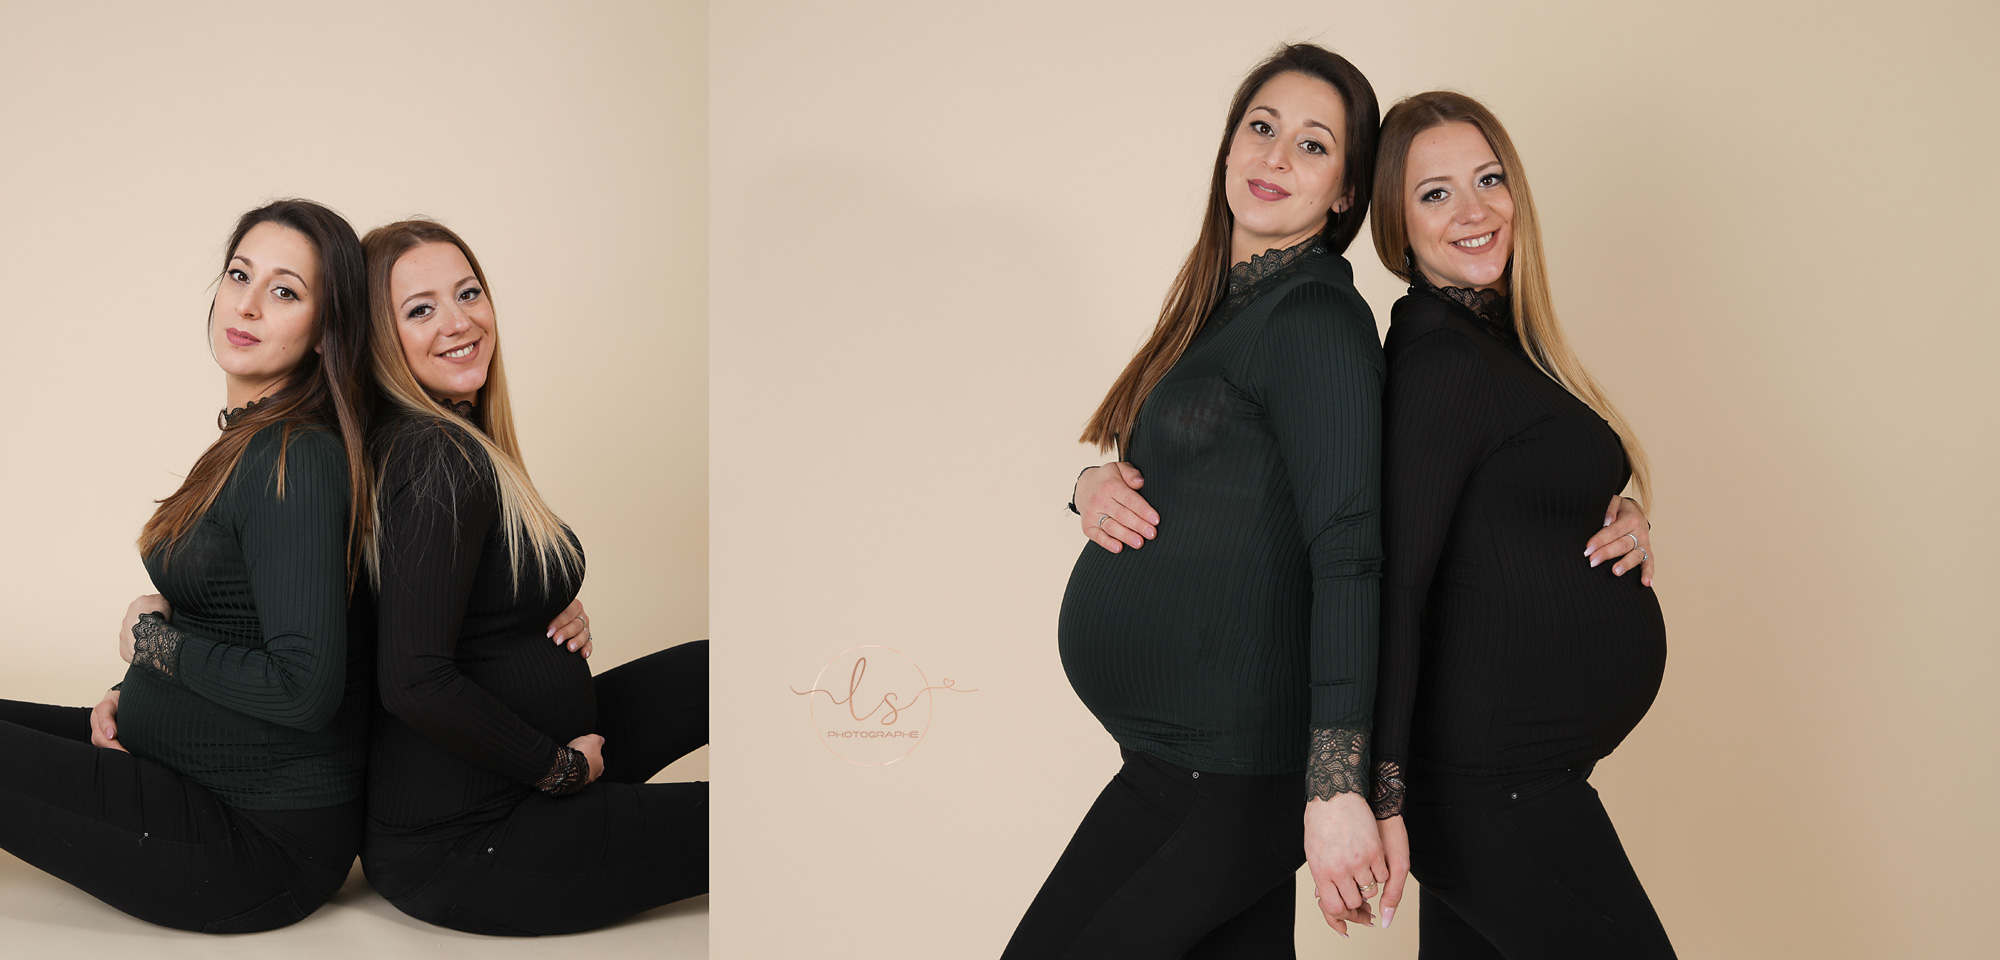  grossesse entre soeurs photo